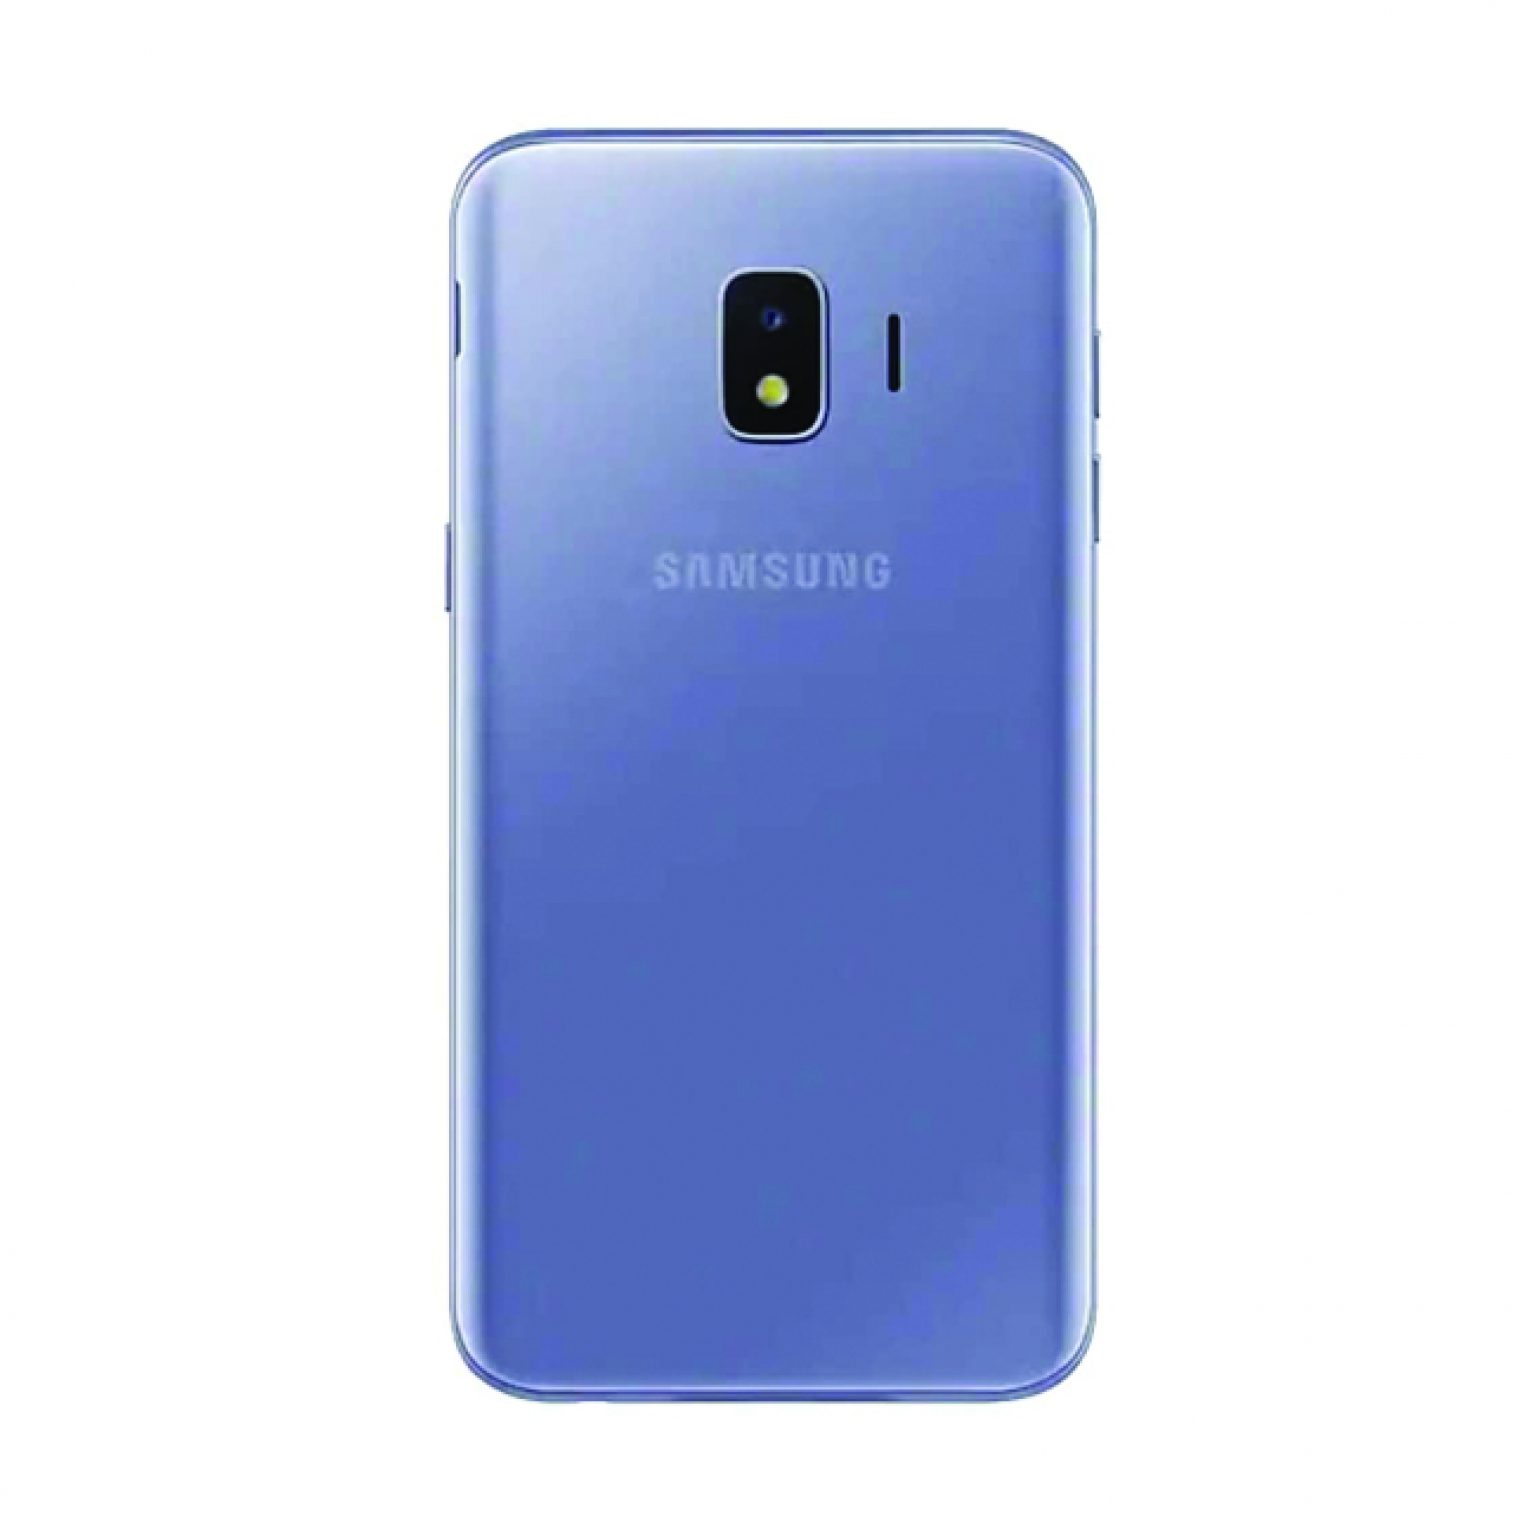 Samsung Galaxy J2 Core 16GB 1